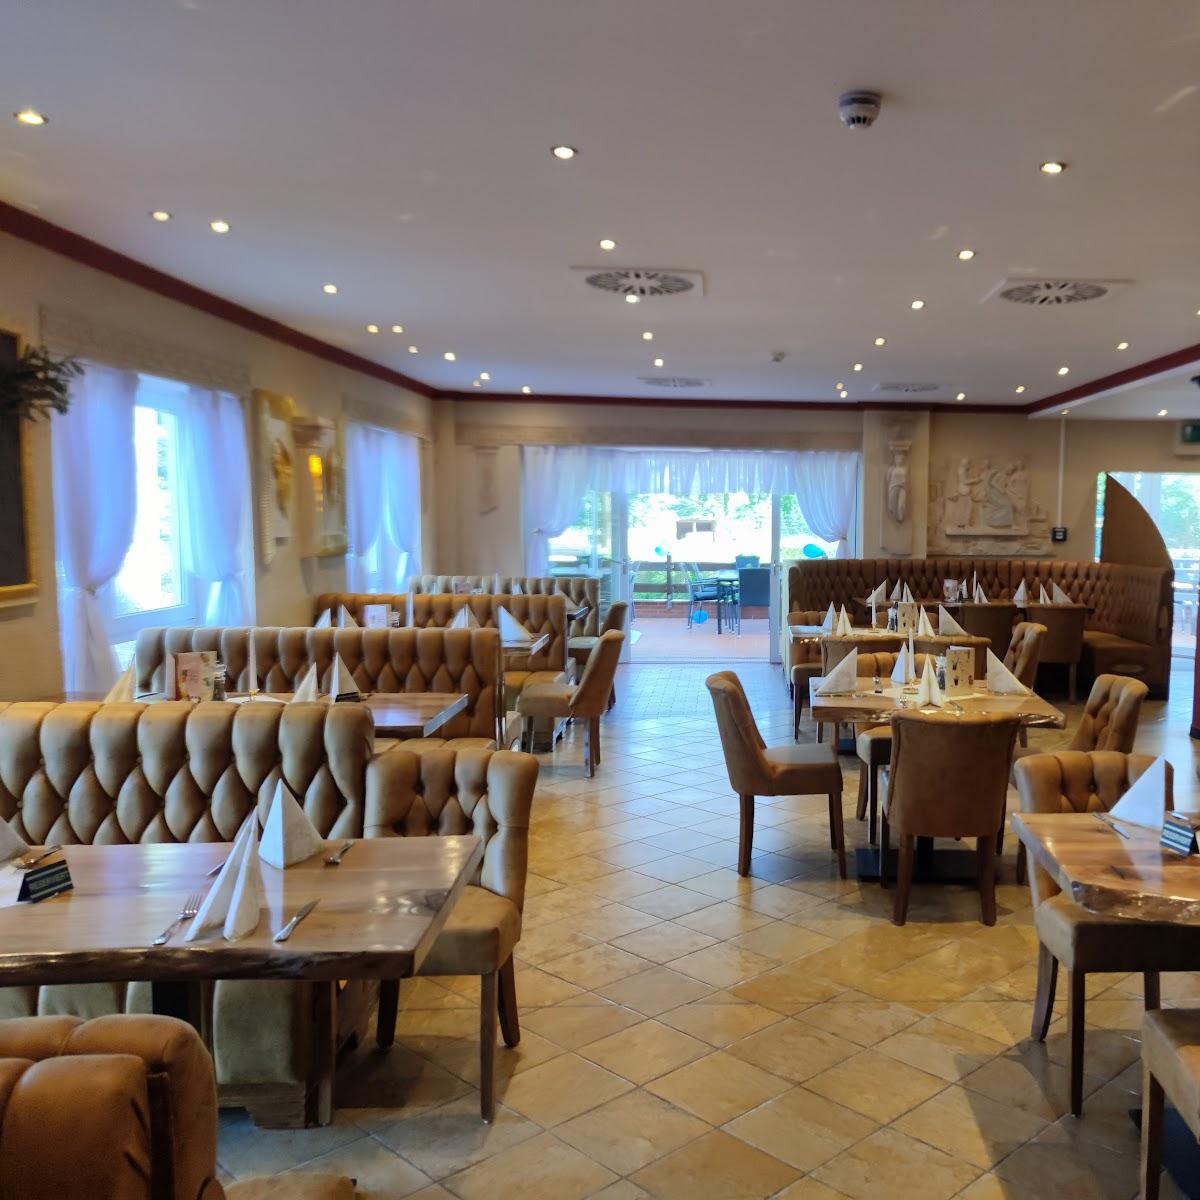 Restaurant "Kreta" in Pasewalk